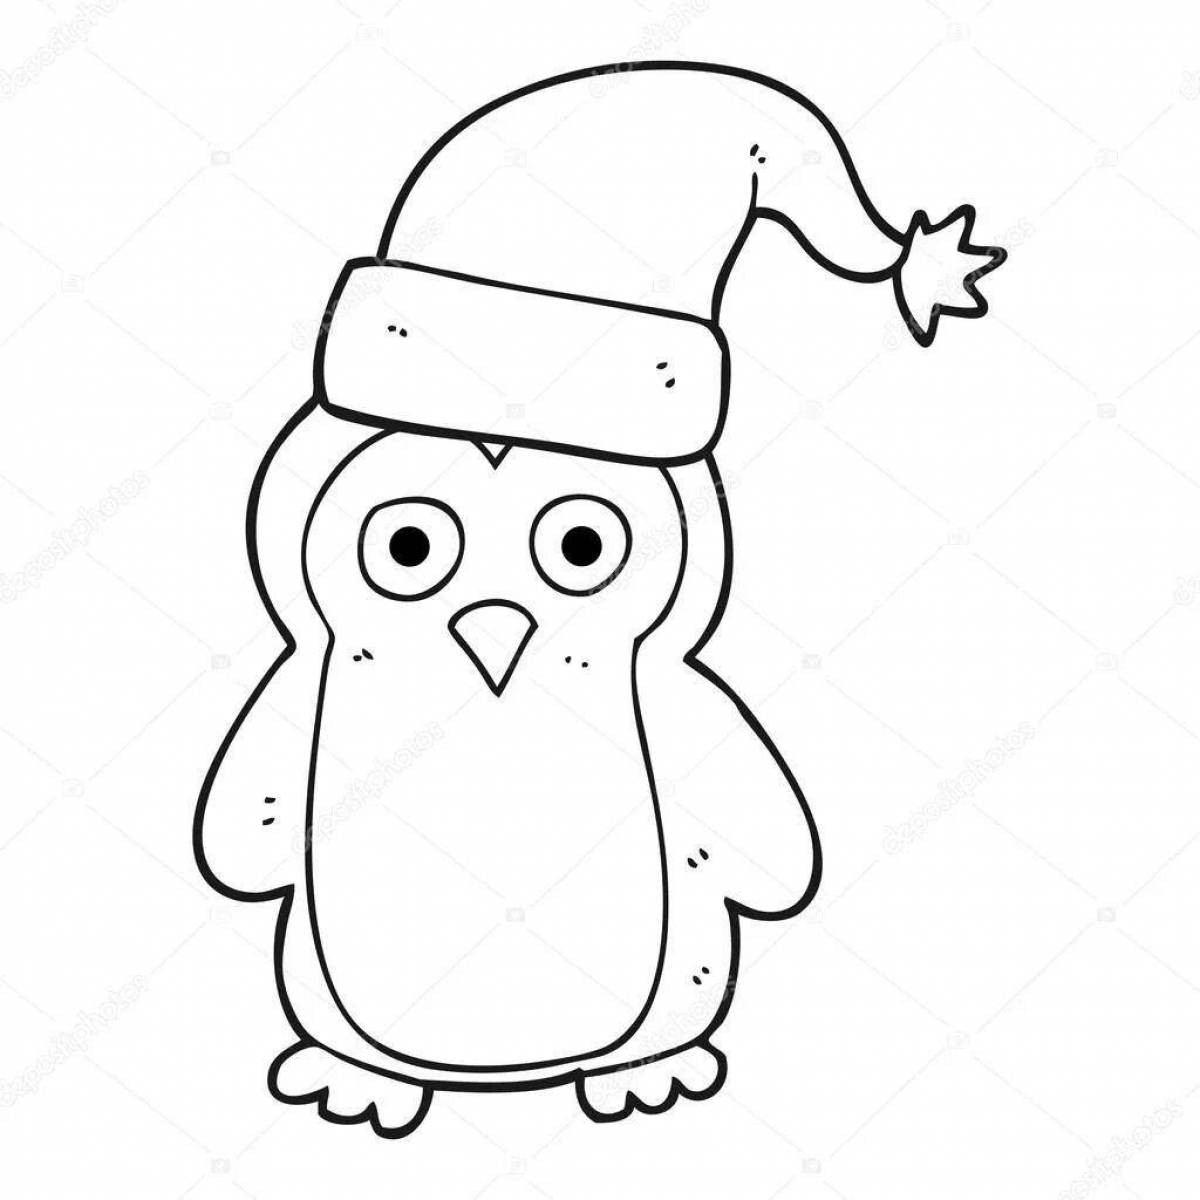 Smiling penguin wearing a hat